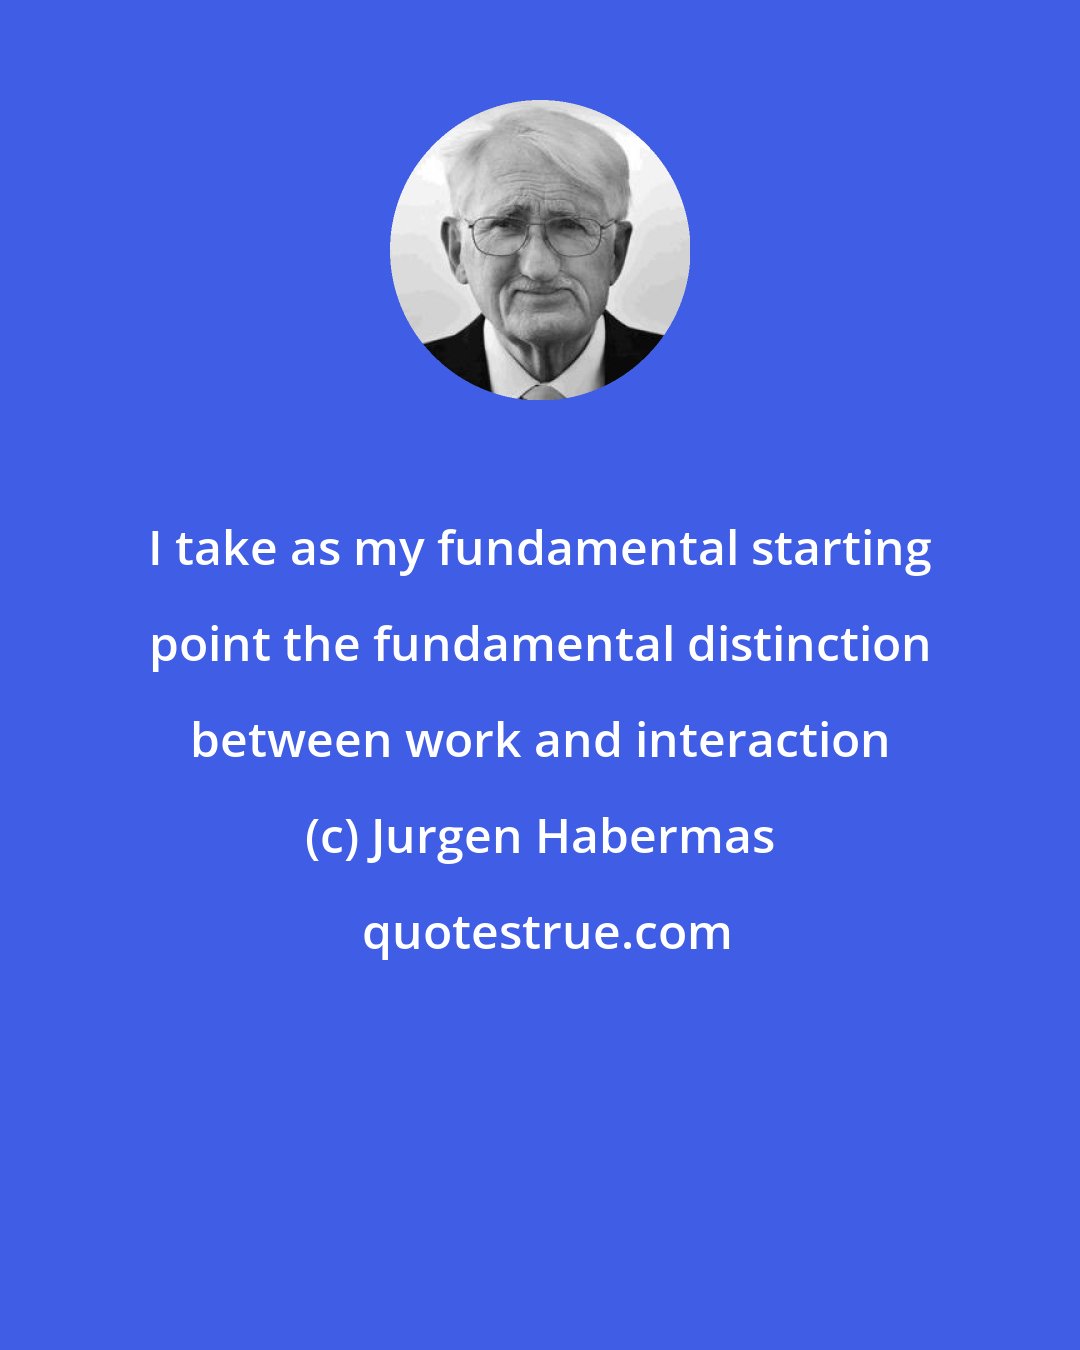 Jurgen Habermas: I take as my fundamental starting point the fundamental distinction between work and interaction